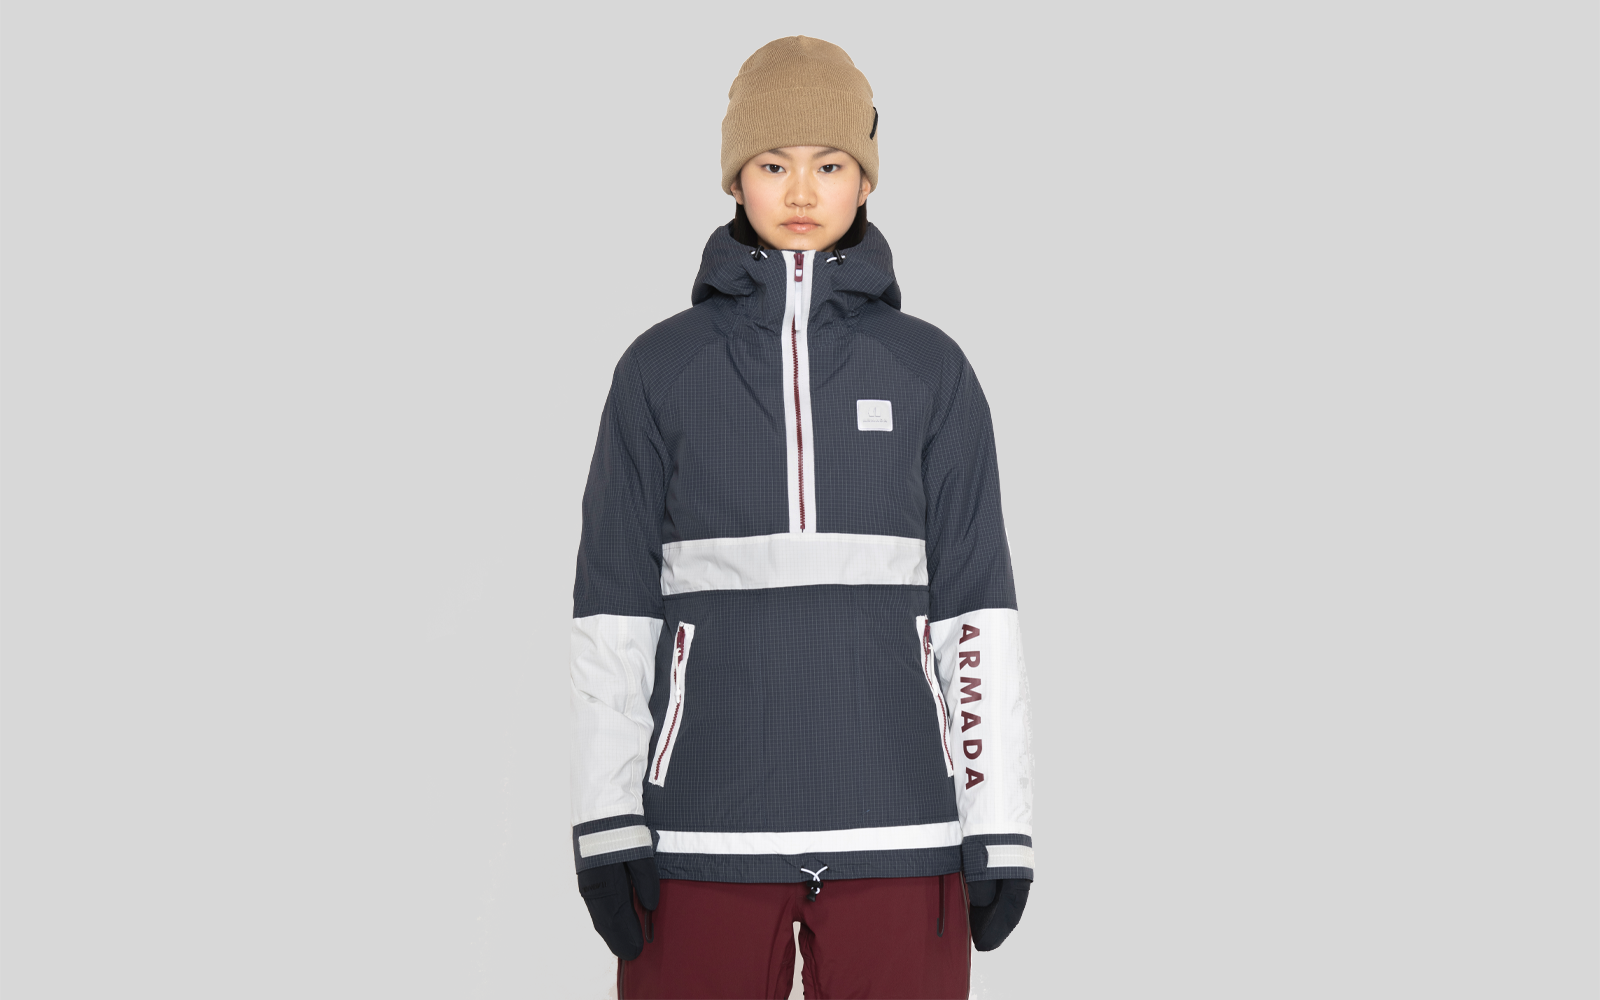 The Warmest Ski Clothing for Long Ski Days - Powder7 Lift Line Blog